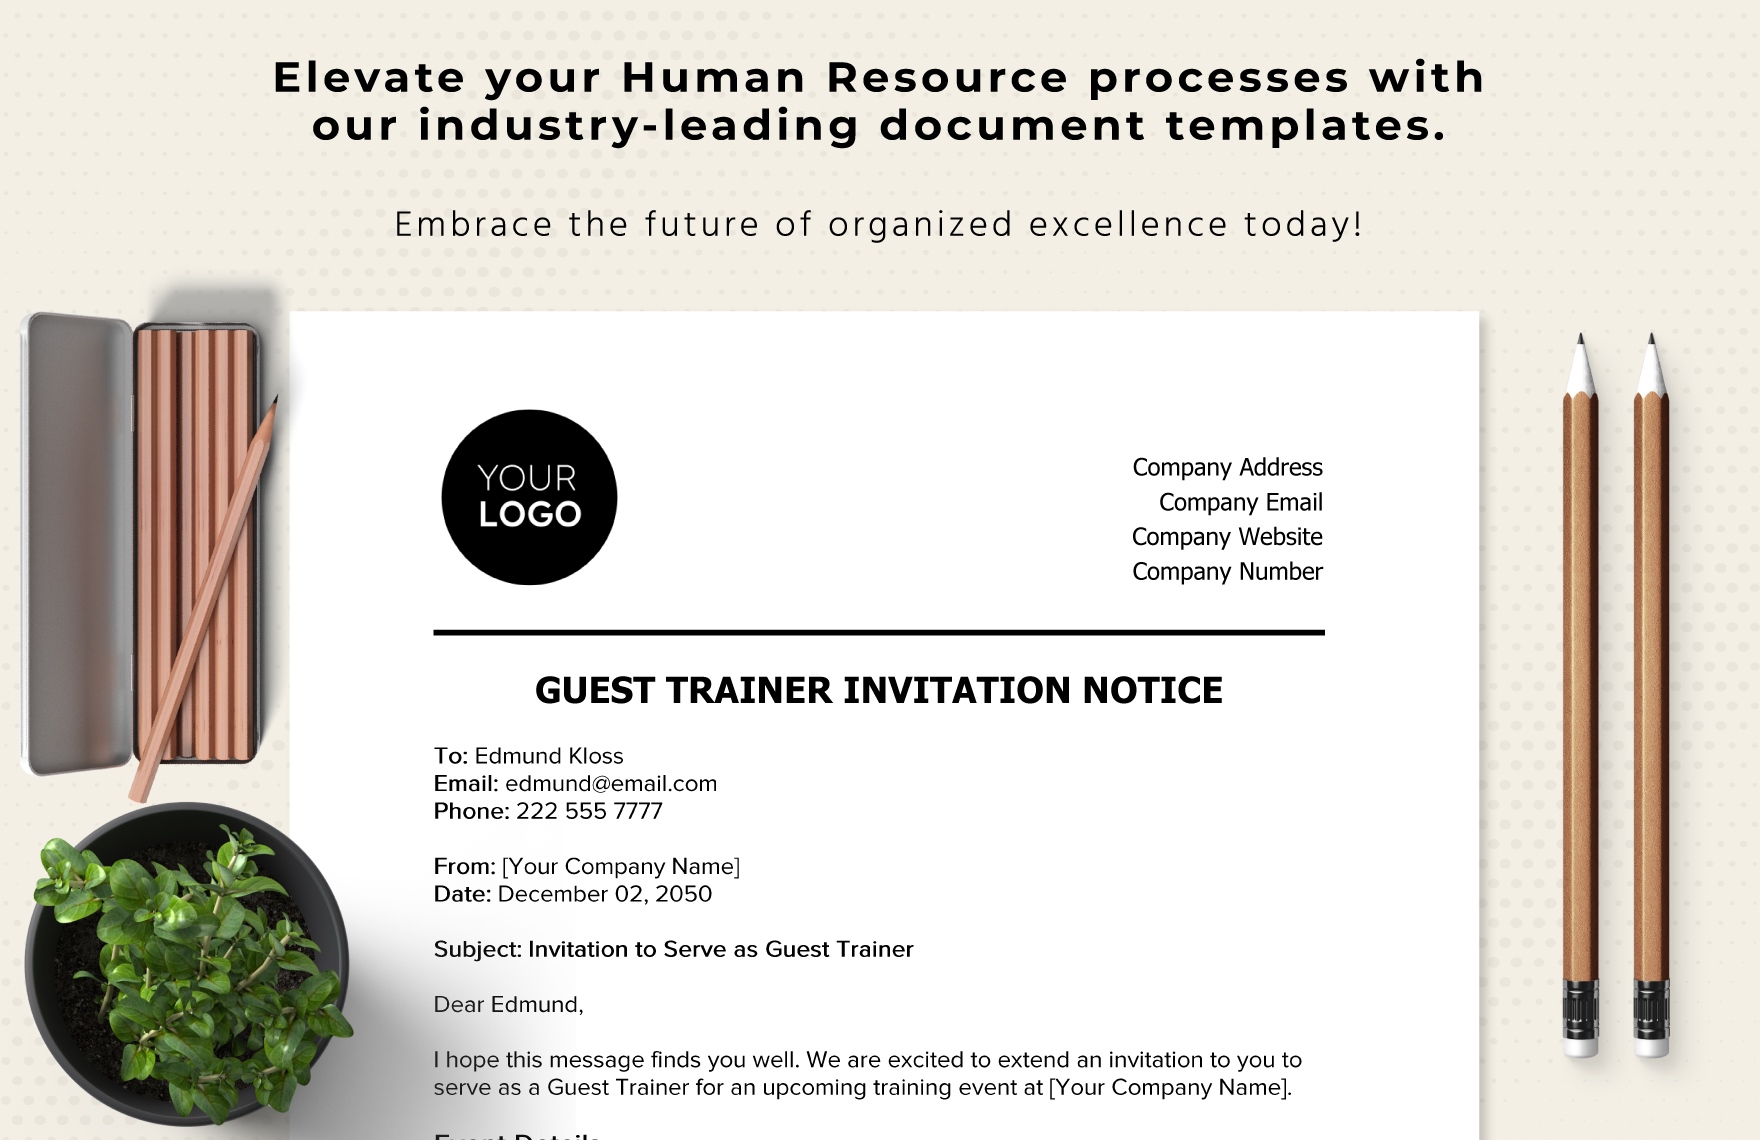 Guest Trainer Invitation Notice HR Template